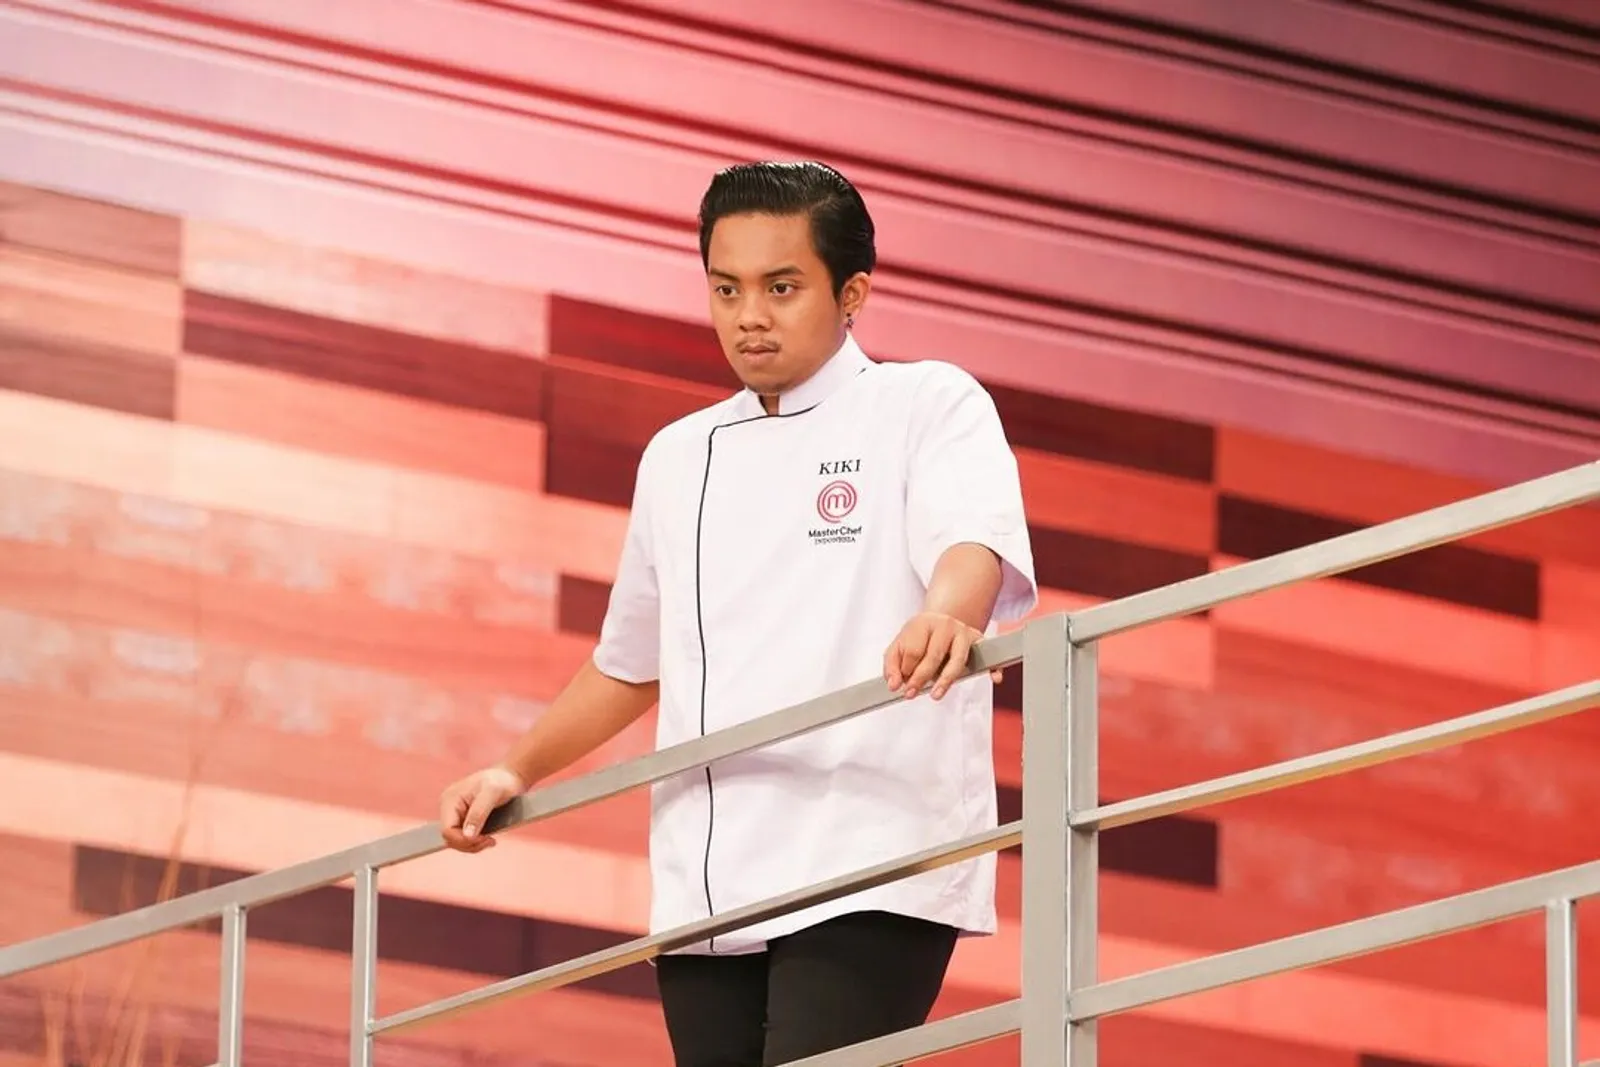 Profil Kiki Masterchef Indonesia Season 11, Trending Setelah Final